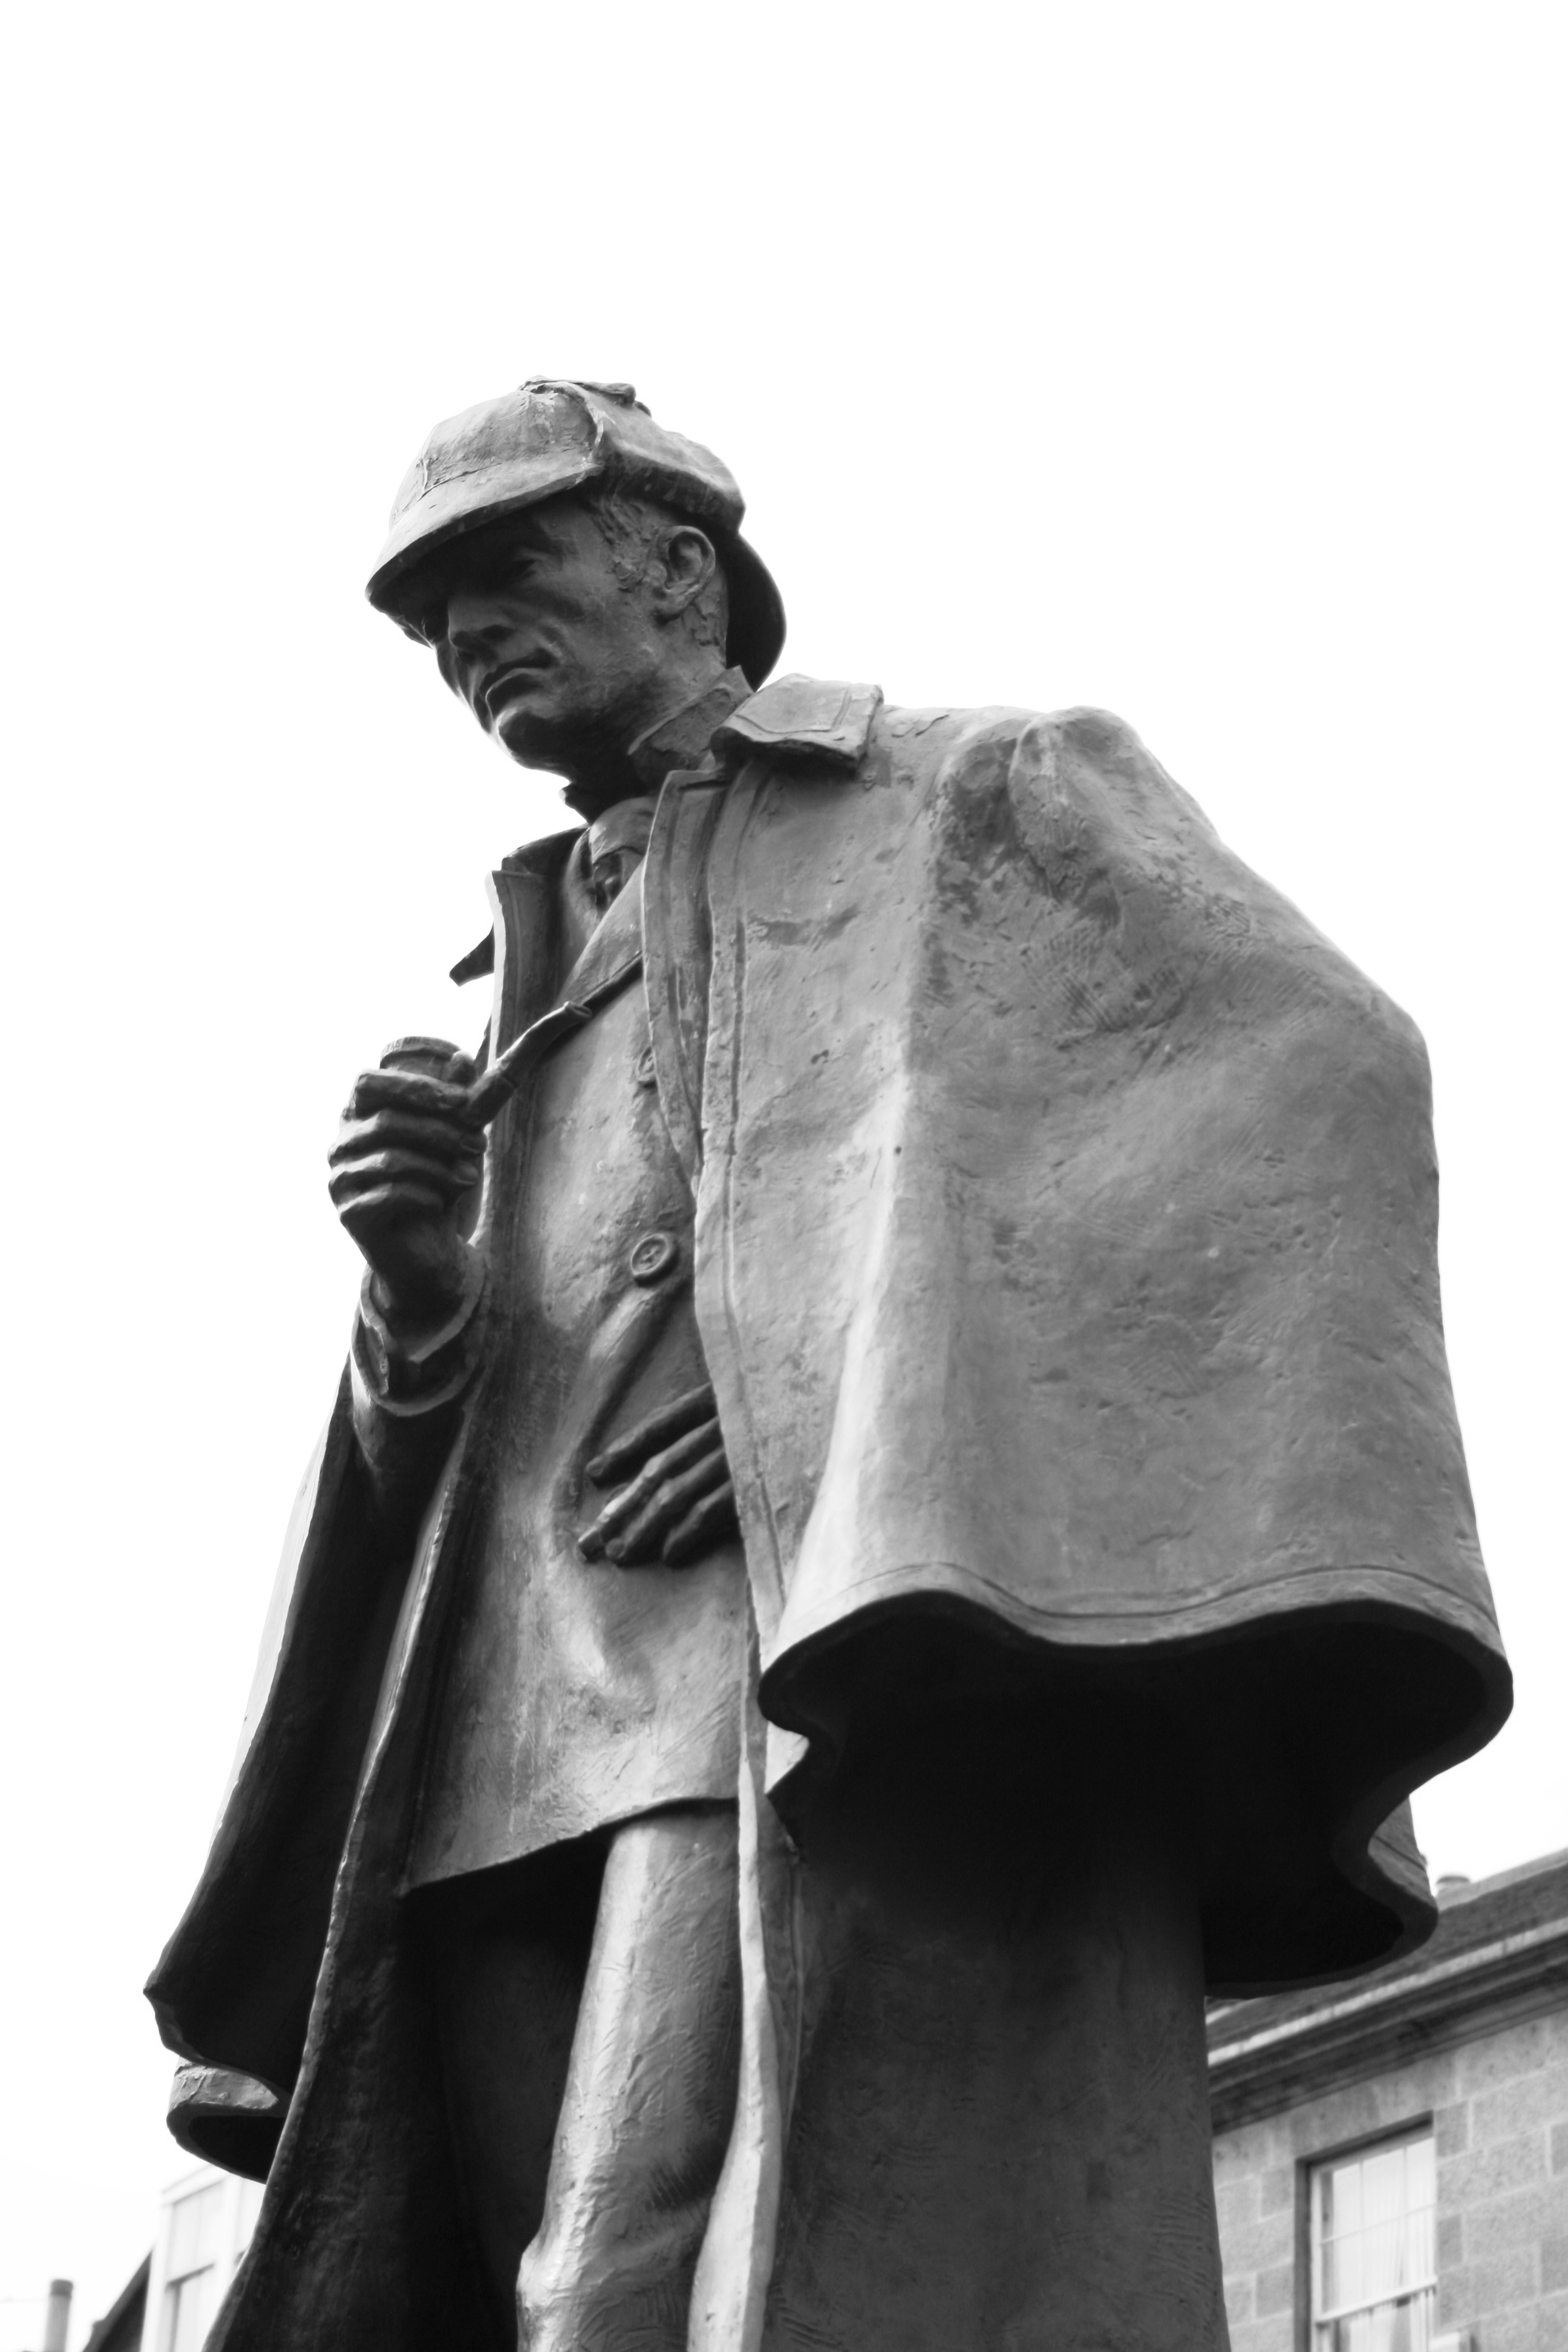 https://upload.wikimedia.org/wikipedia/commons/0/0d/Statue_of_Sherlock_Holmes_in_Edinburgh.jpg